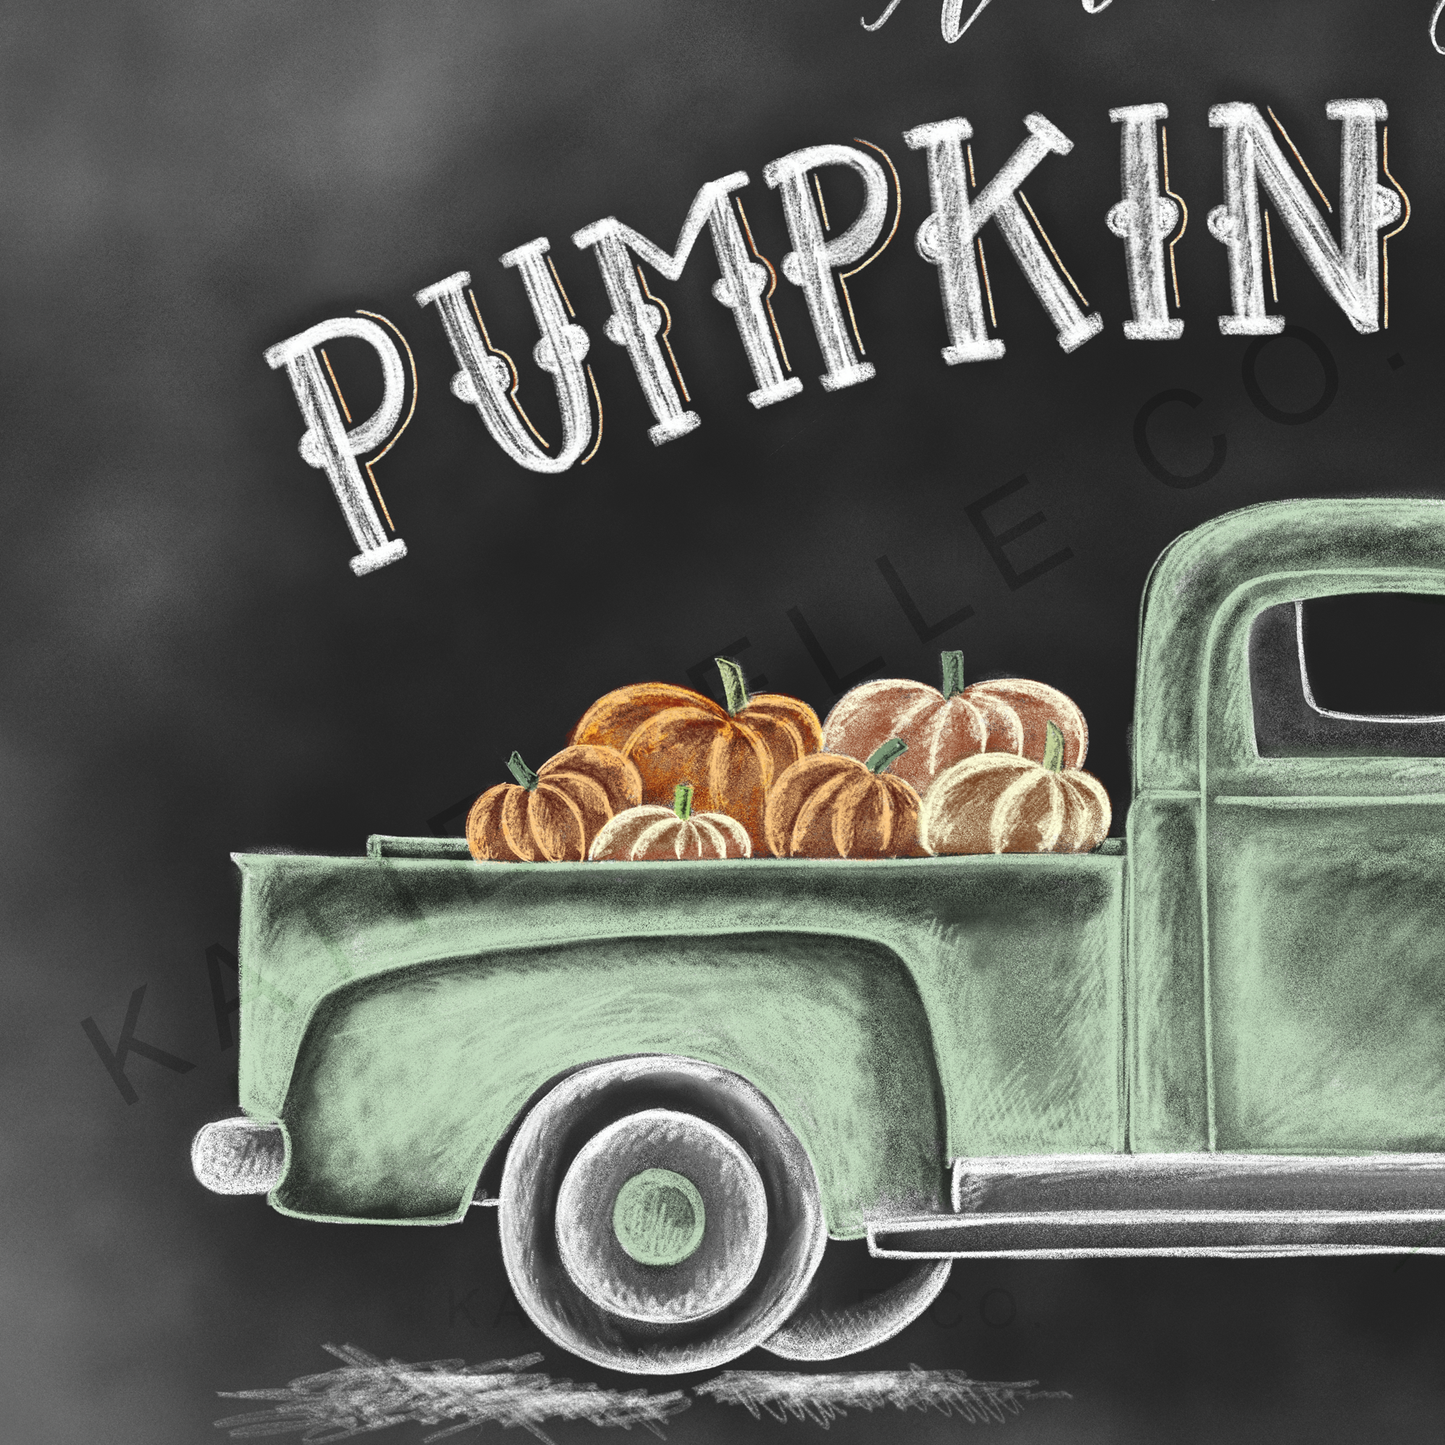 Pumpkin Patch. Autumn Farms. Farmers Market. Locally Grown. U pick pumpkins. Chalk Art. Pumpkins in Truck. Green Vintage Pickup Truck. Hand Drawn Illustration. Chalkboard Print. Katie Belle Co. 